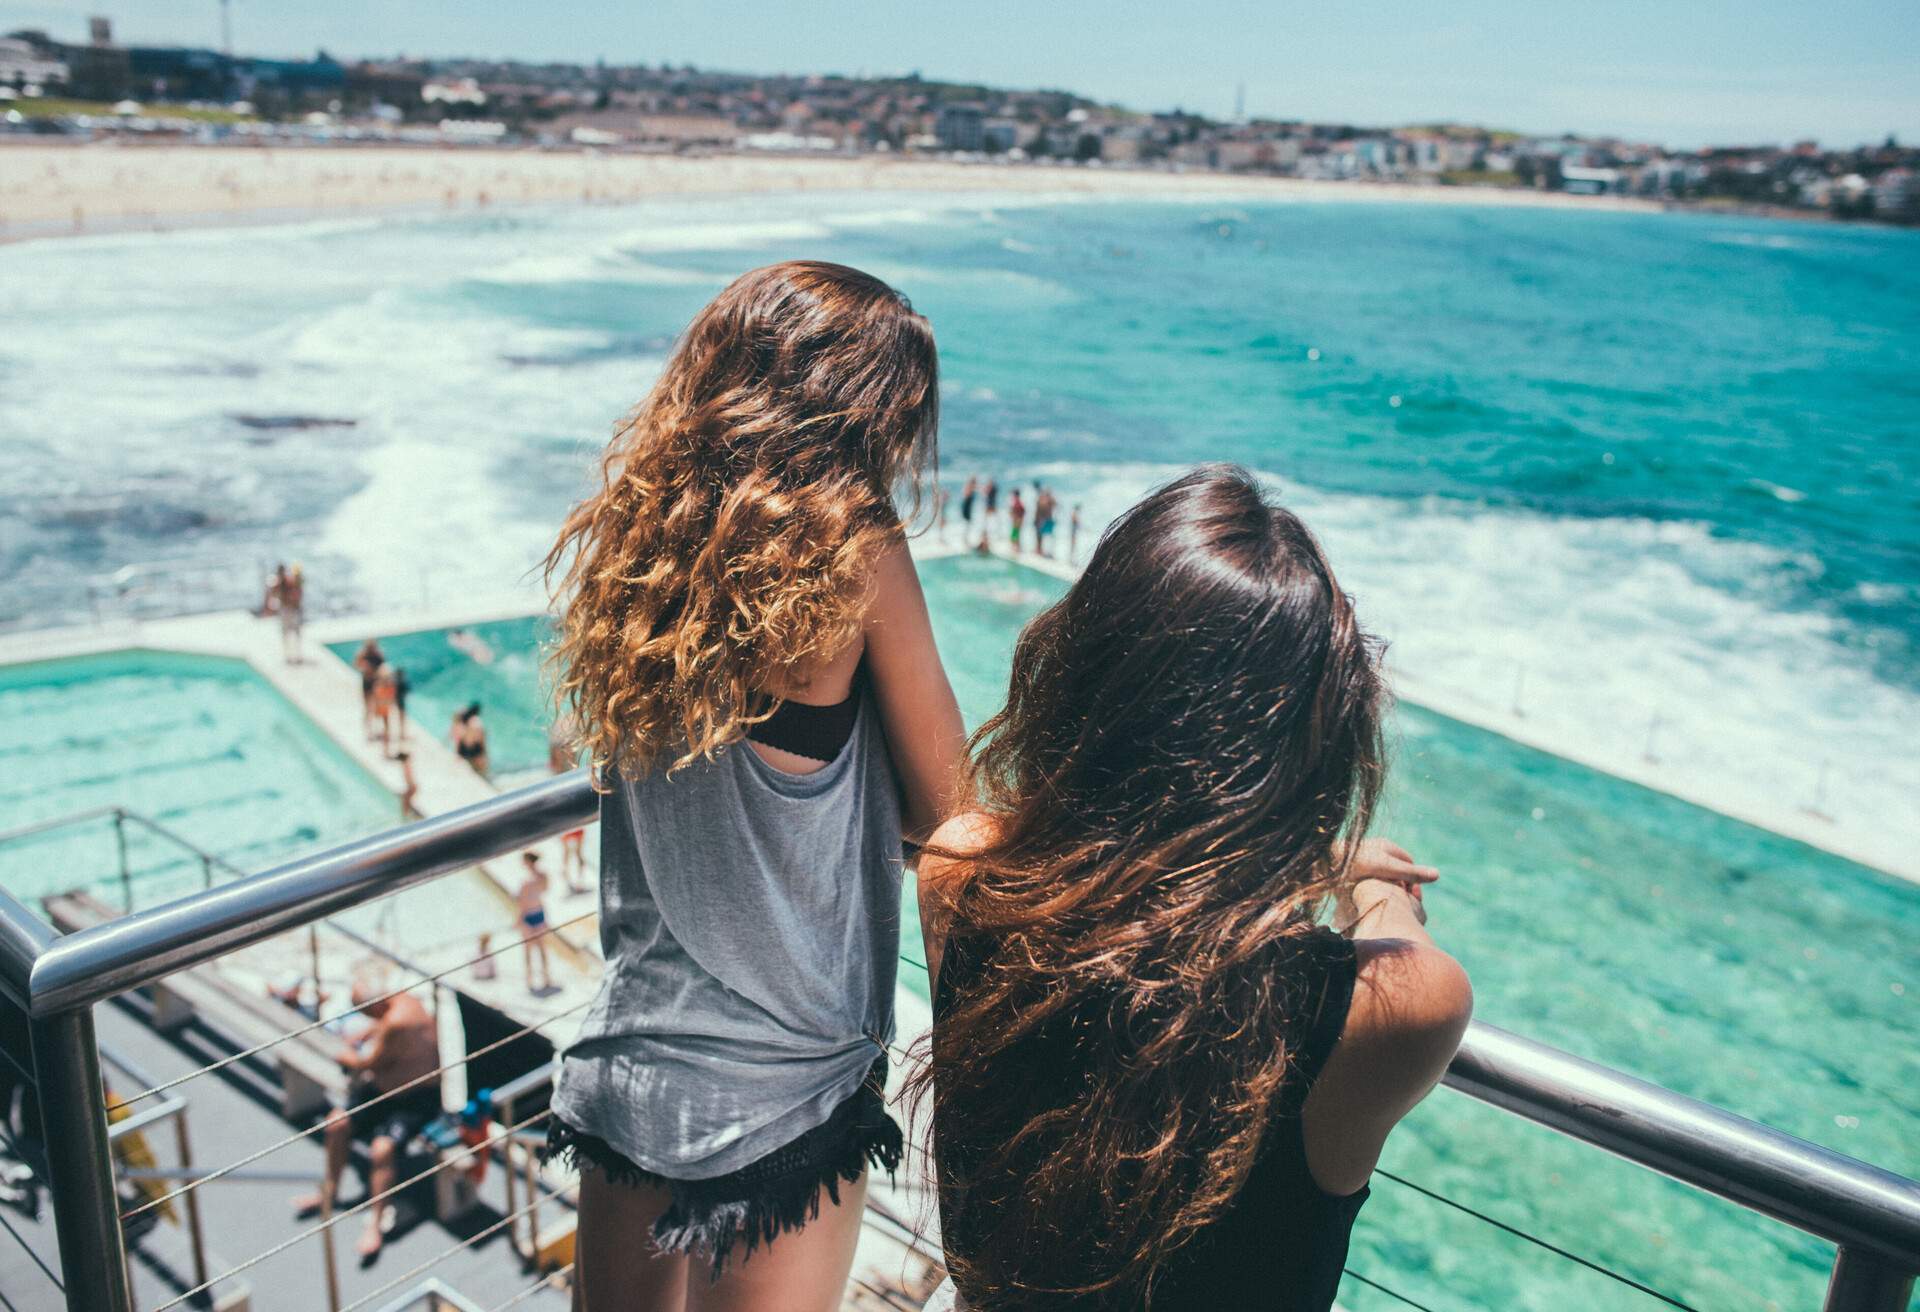 Summer time in Bondi Beach, Australia with friends.